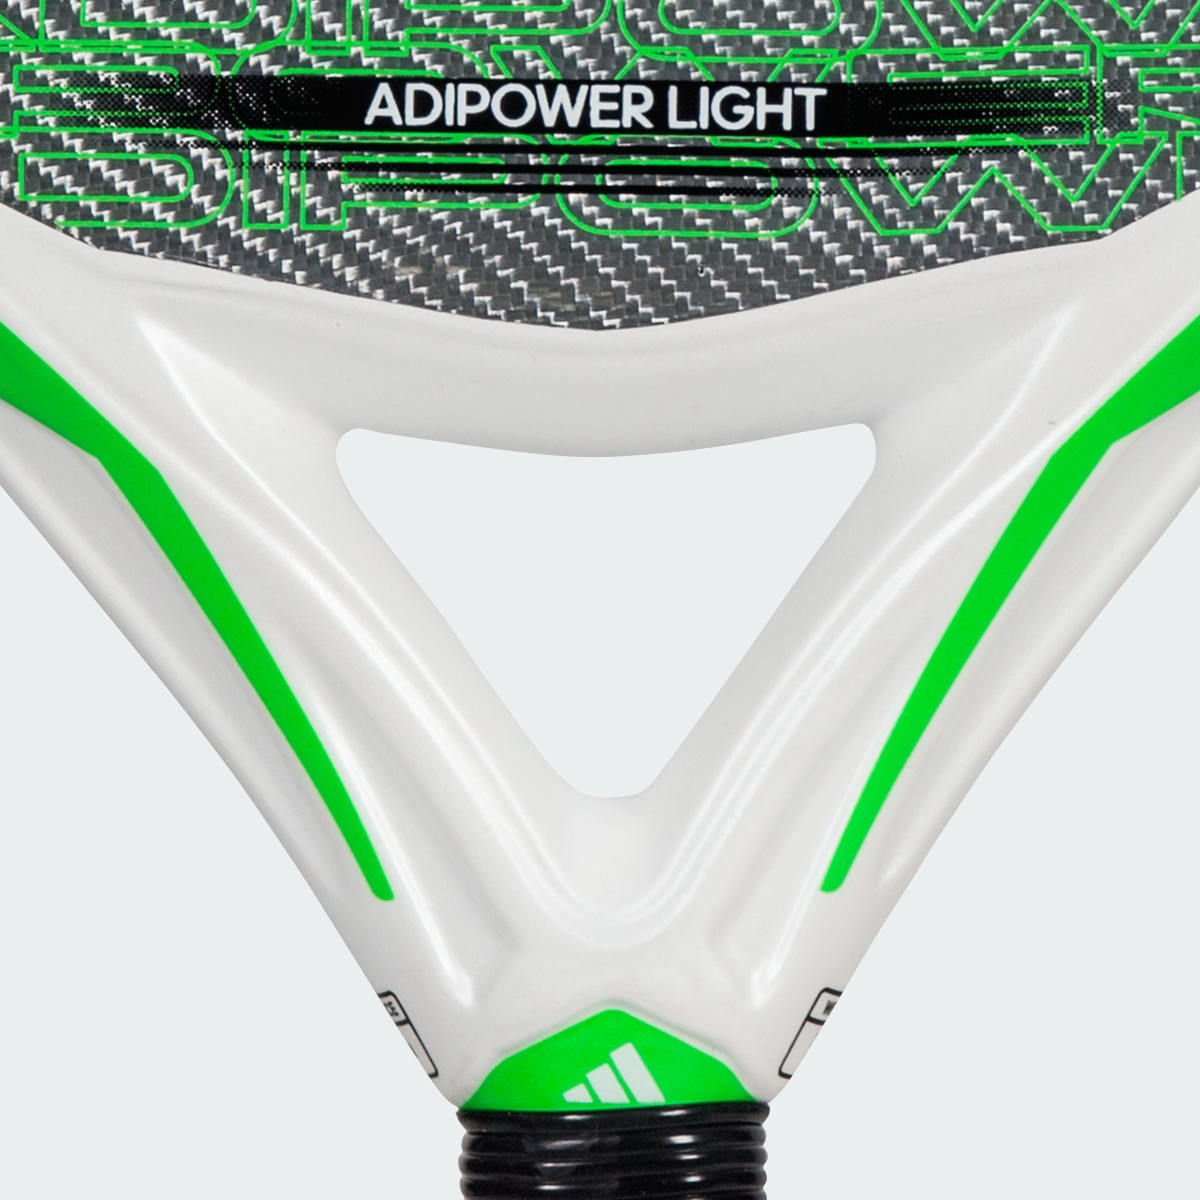 Adidas Adipower Light 3.3 Padel Racket. 5